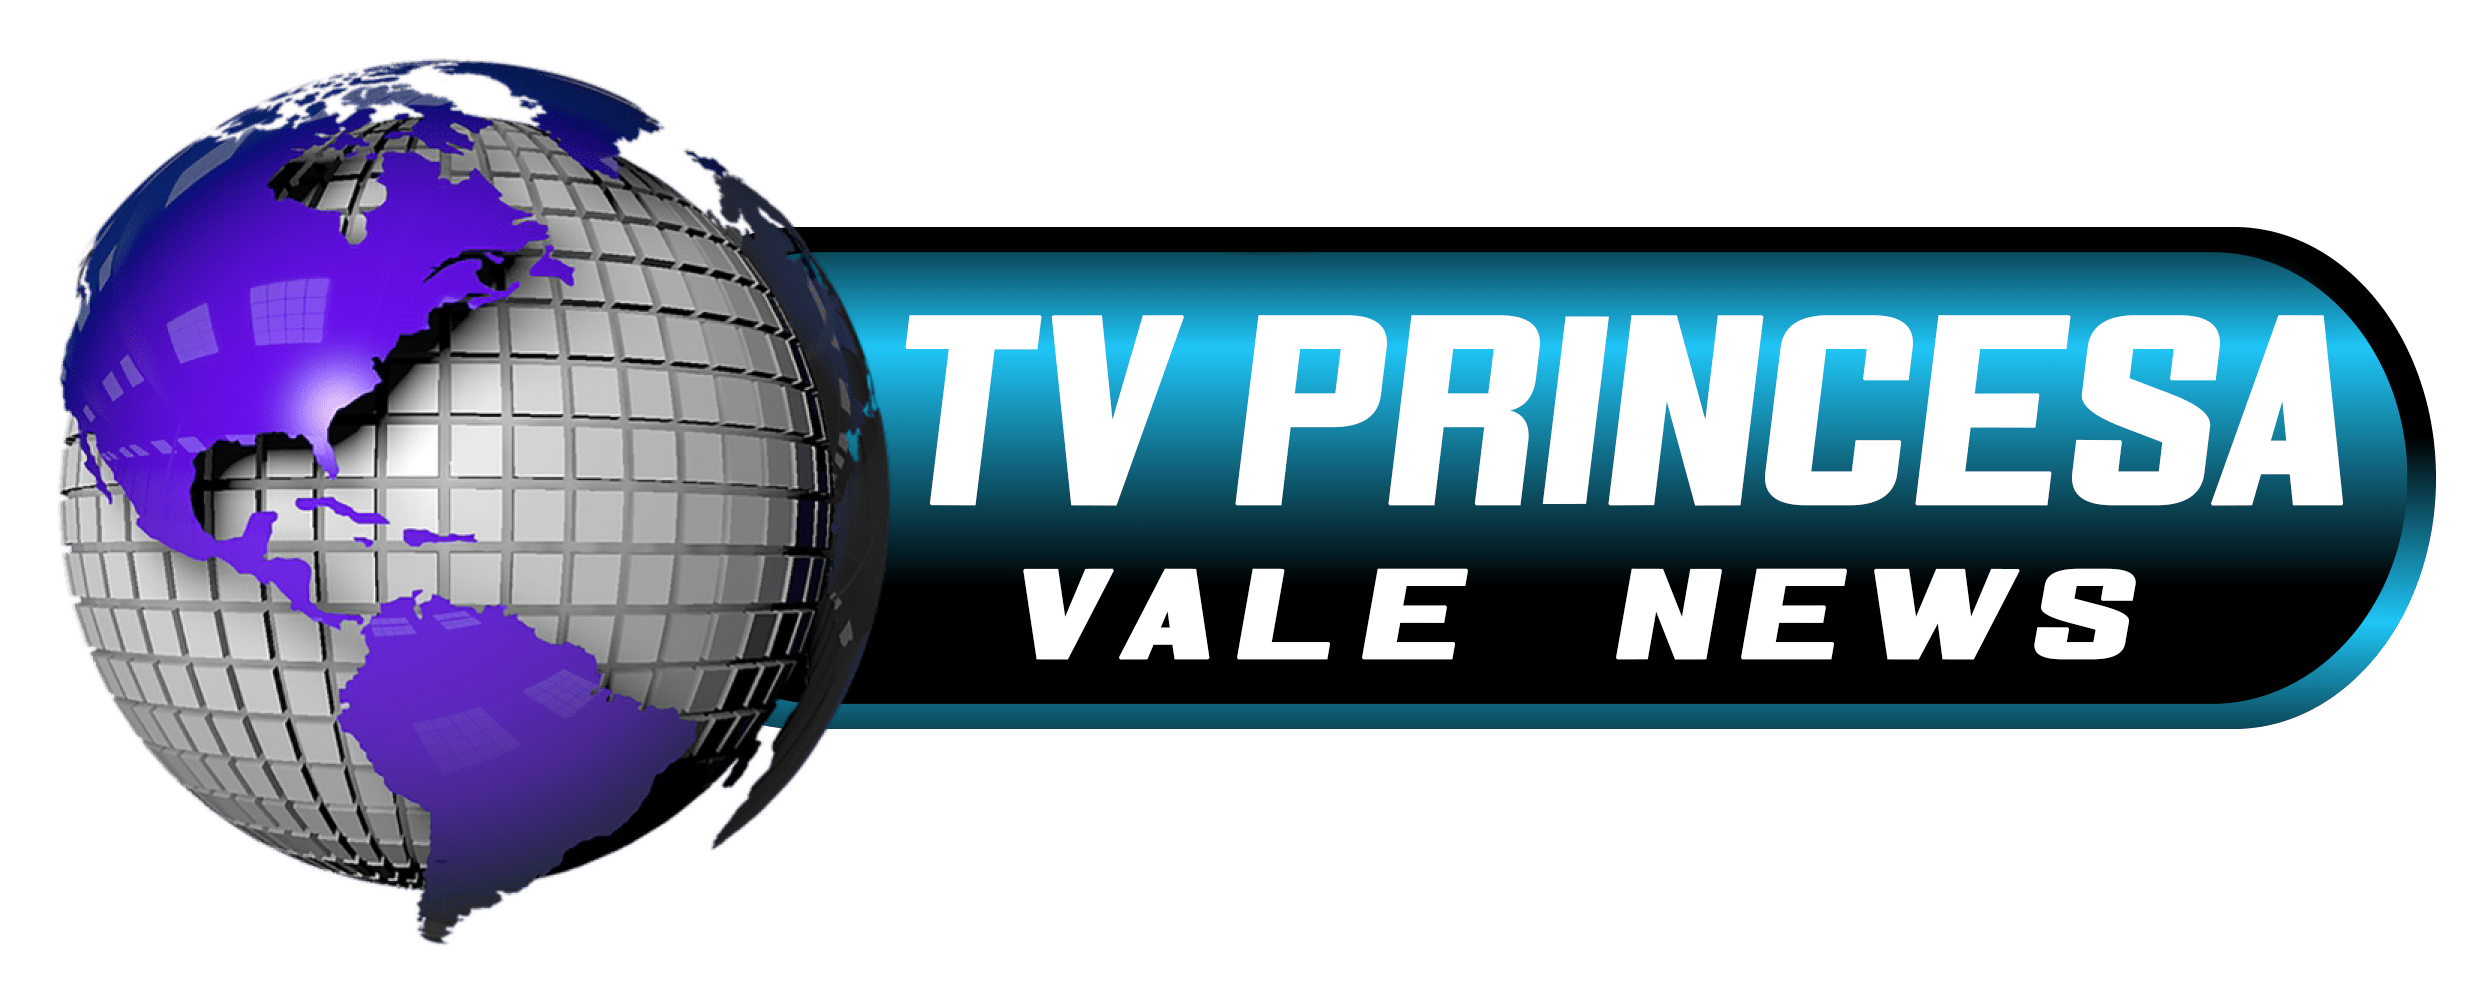 TV Princesa Vale News